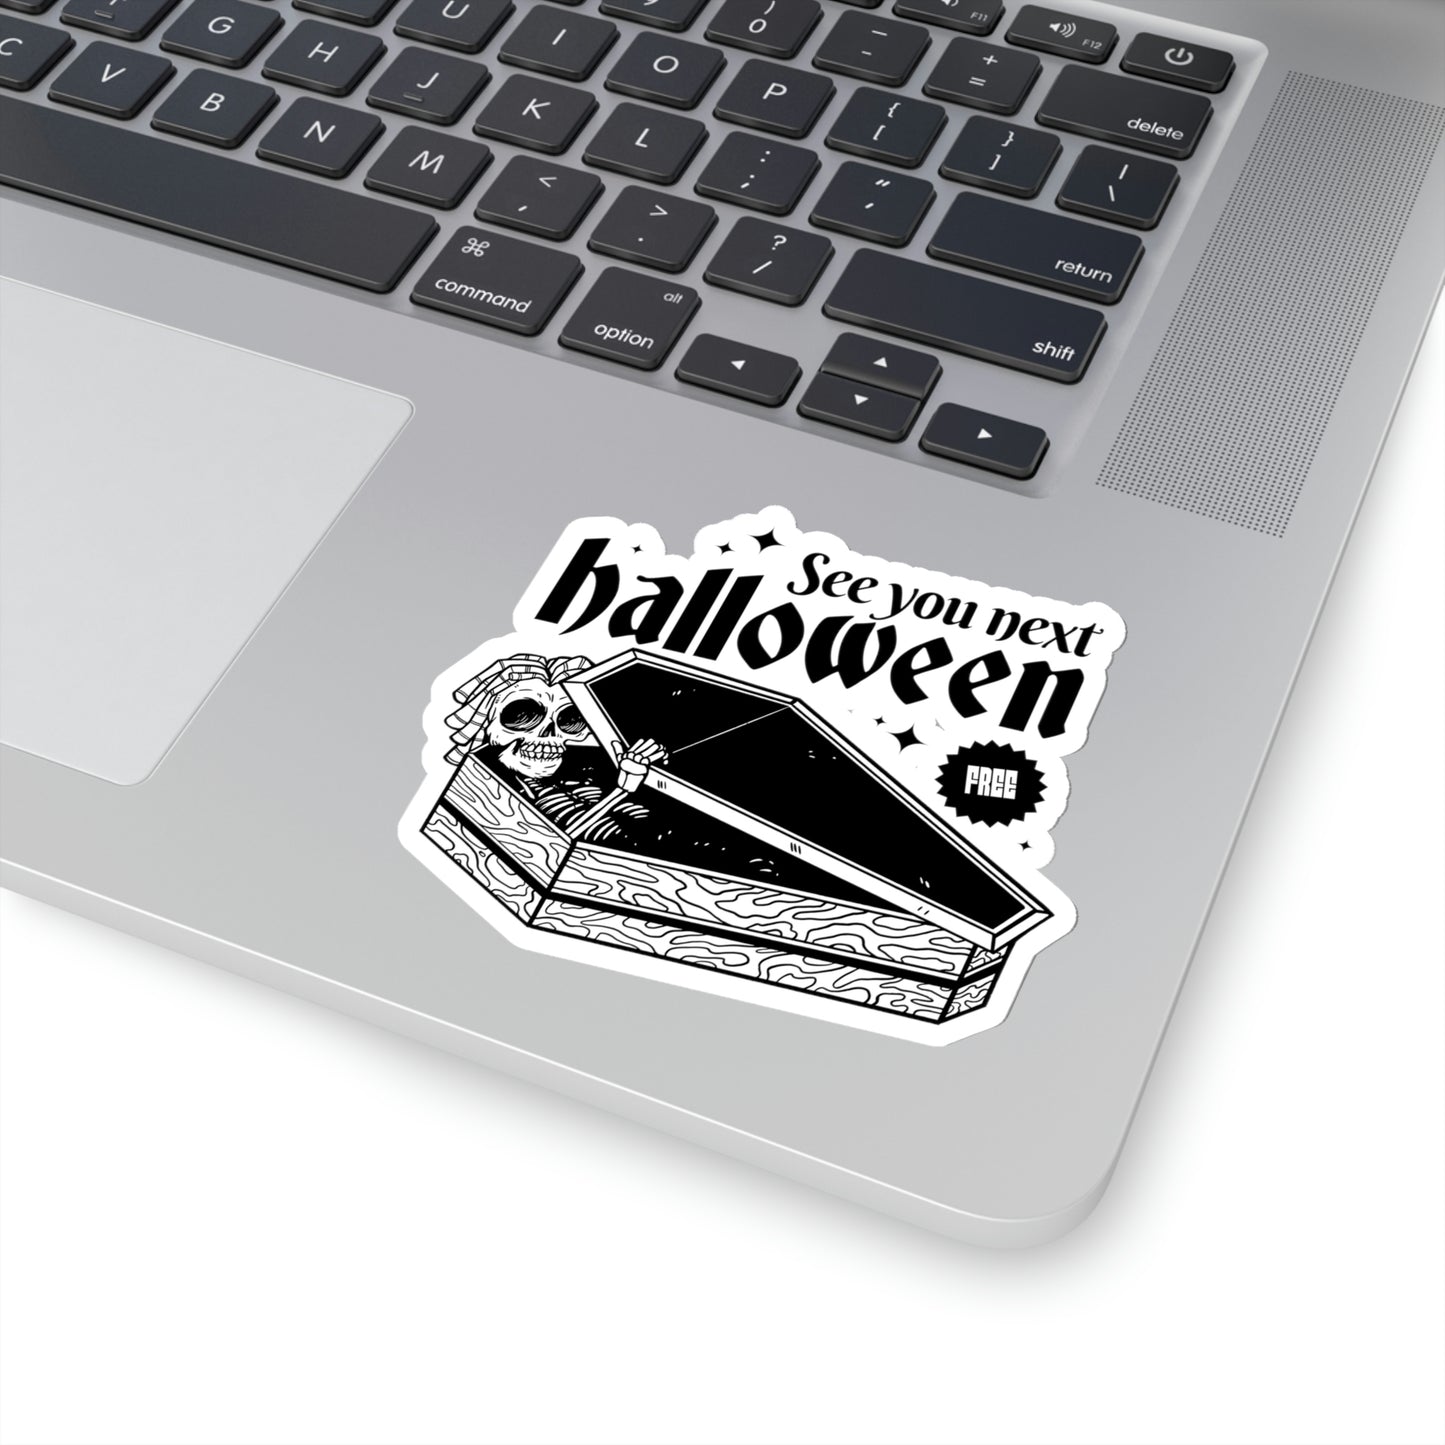 See you next Halloween Skeleton In Coffin Sticker